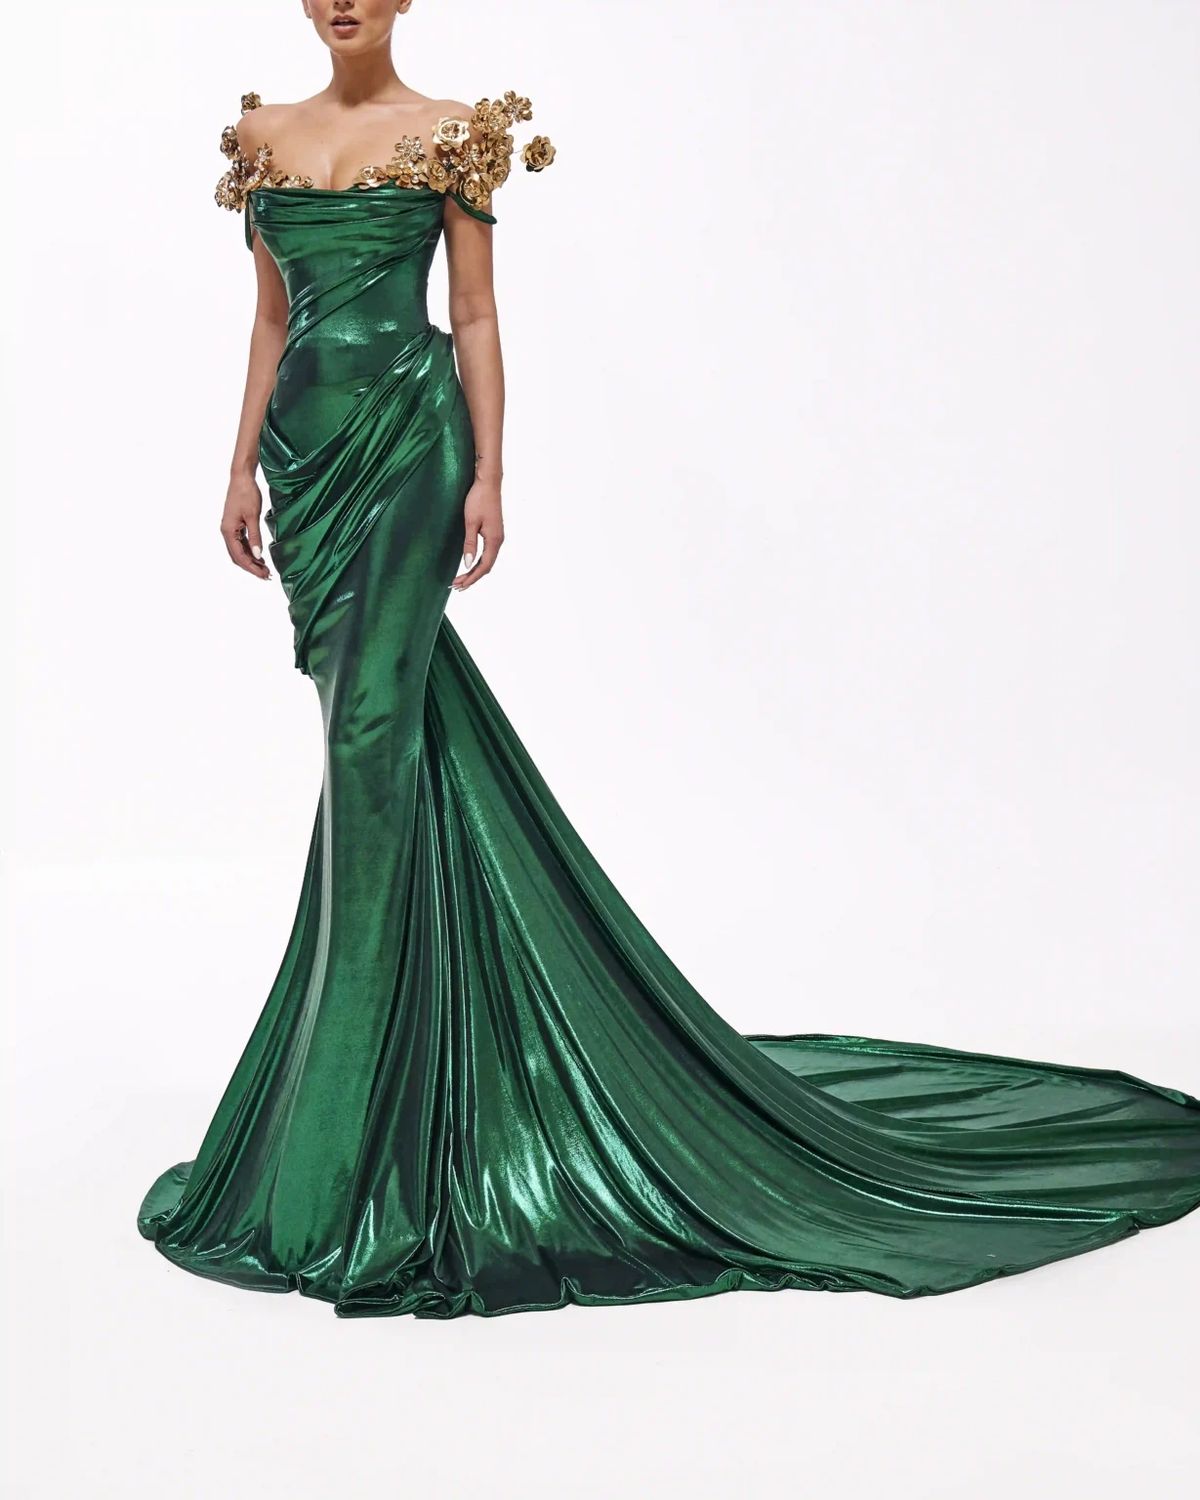 Style metallic-majesty-24-26 Valdrin Sahiti Size M Pageant Green Mermaid Dress on Queenly